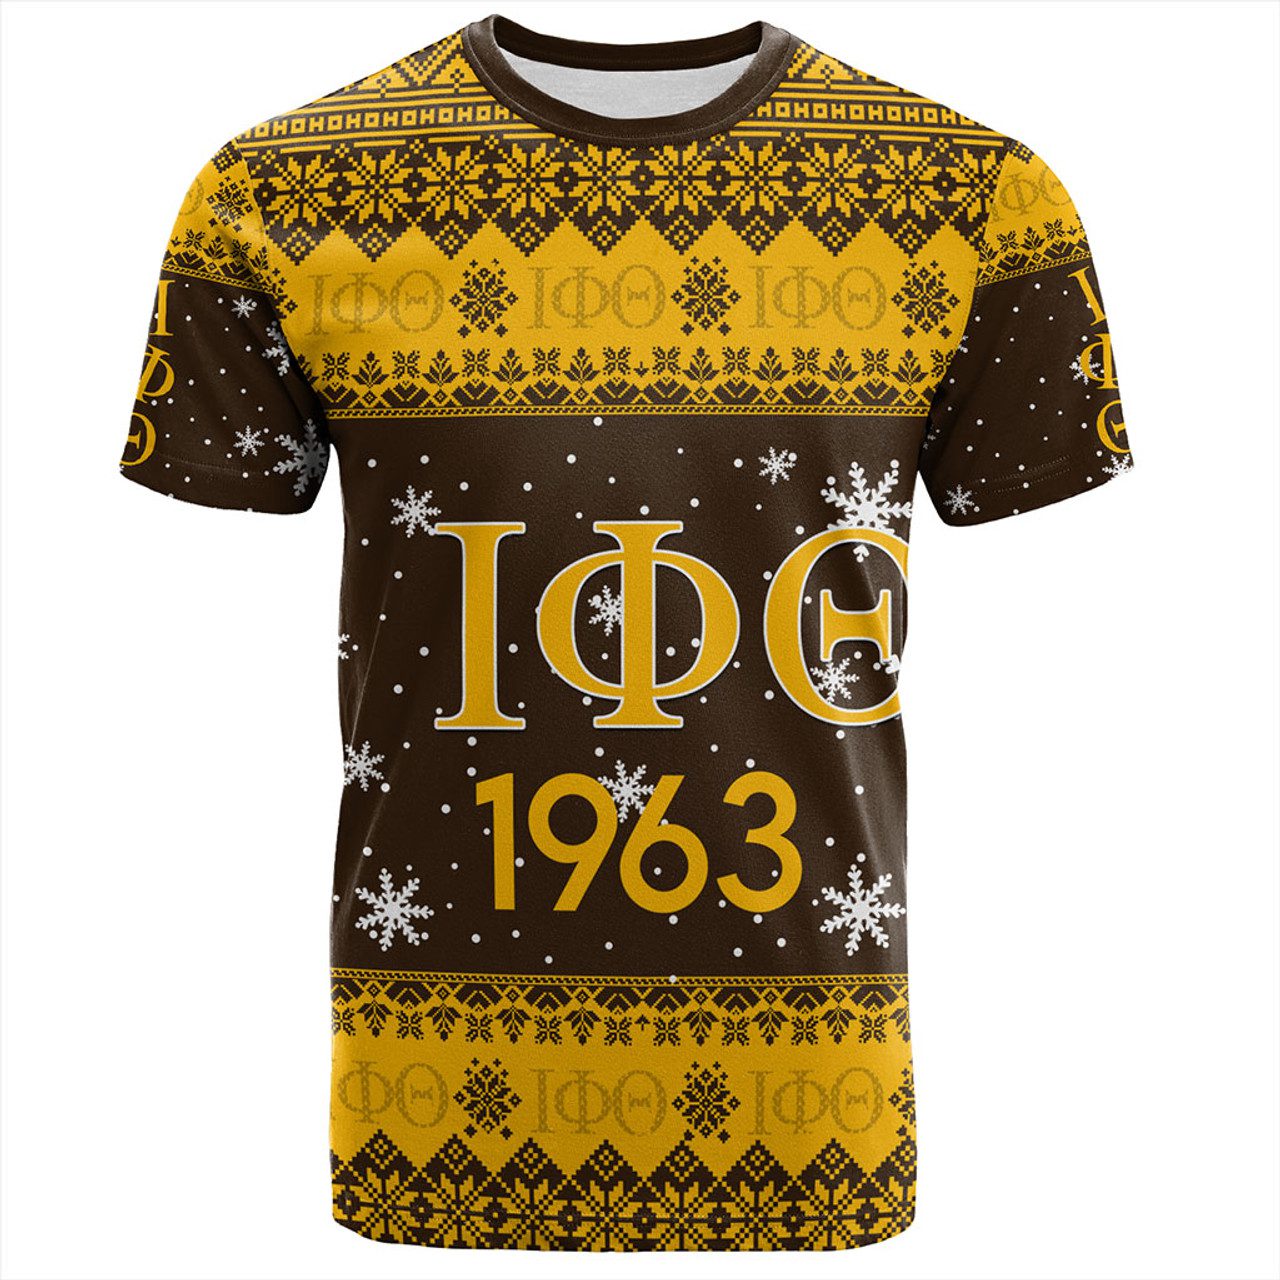 Iota Phi Theta T-Shirt Fraternity Inc Christmas